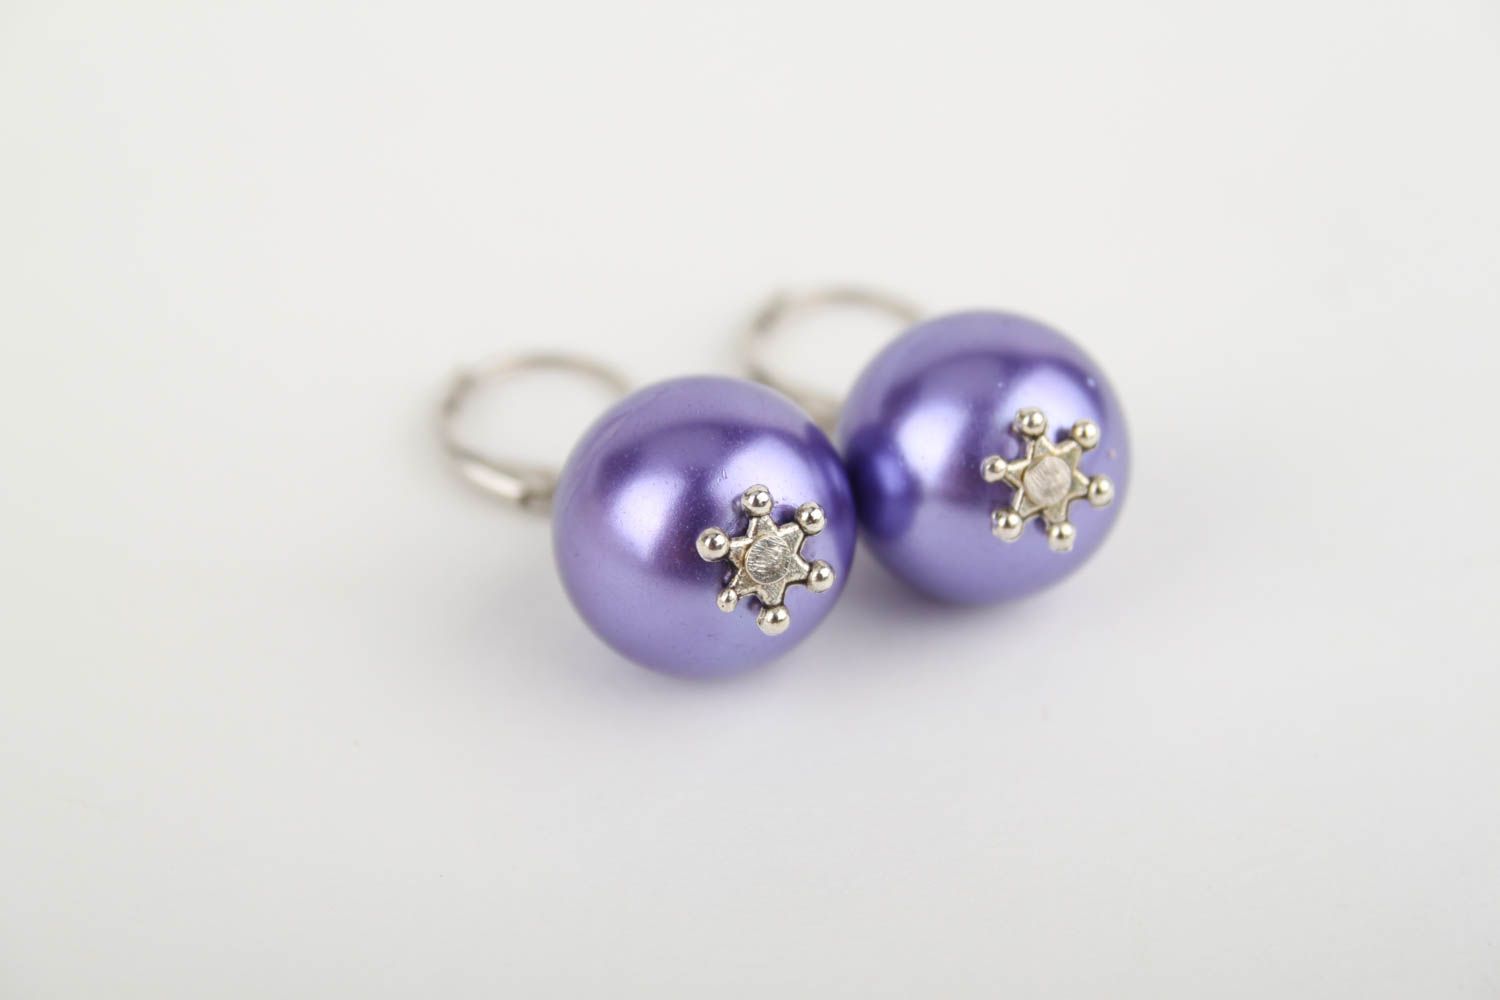 Handmade stylish beaded earrings unusual earrings with charms trendy jewelry photo 4